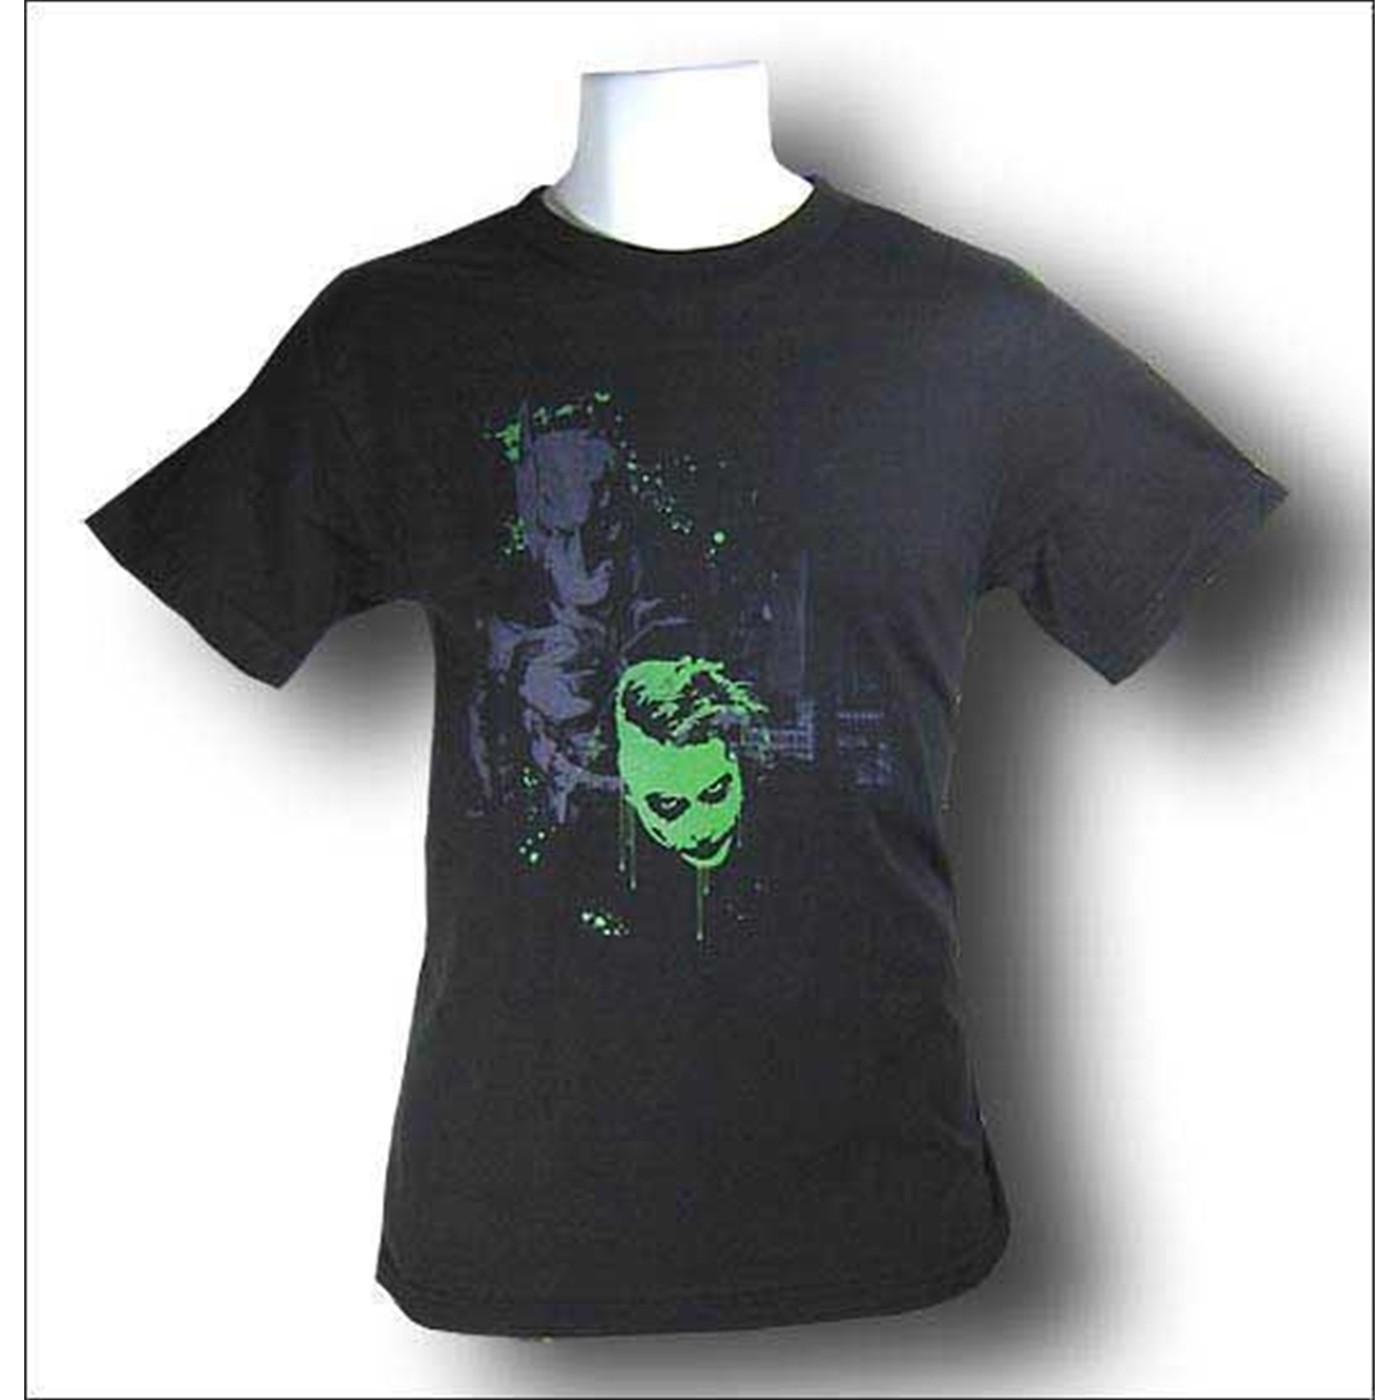 Dark Knight Movie Joker Spoils The Fun T-Shirt